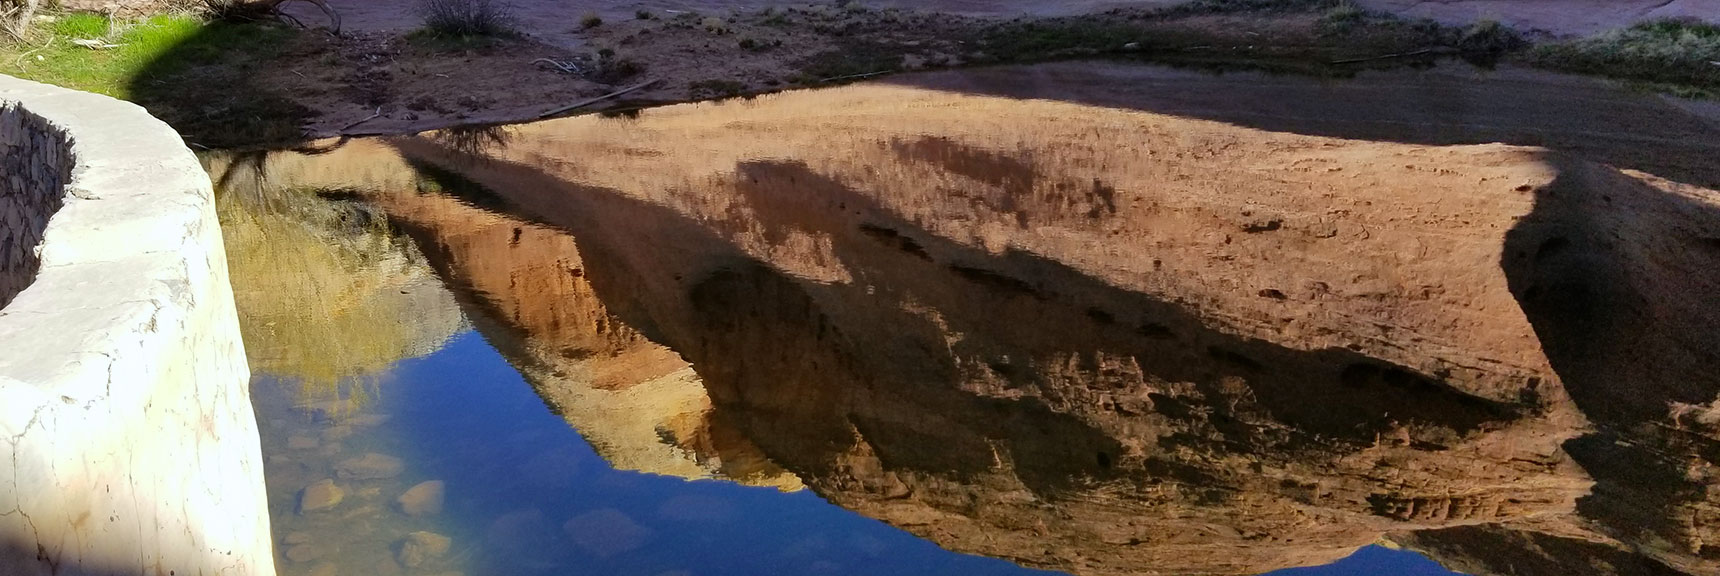 Reservoir in Calico Basin North of Las Vegas, Nevada